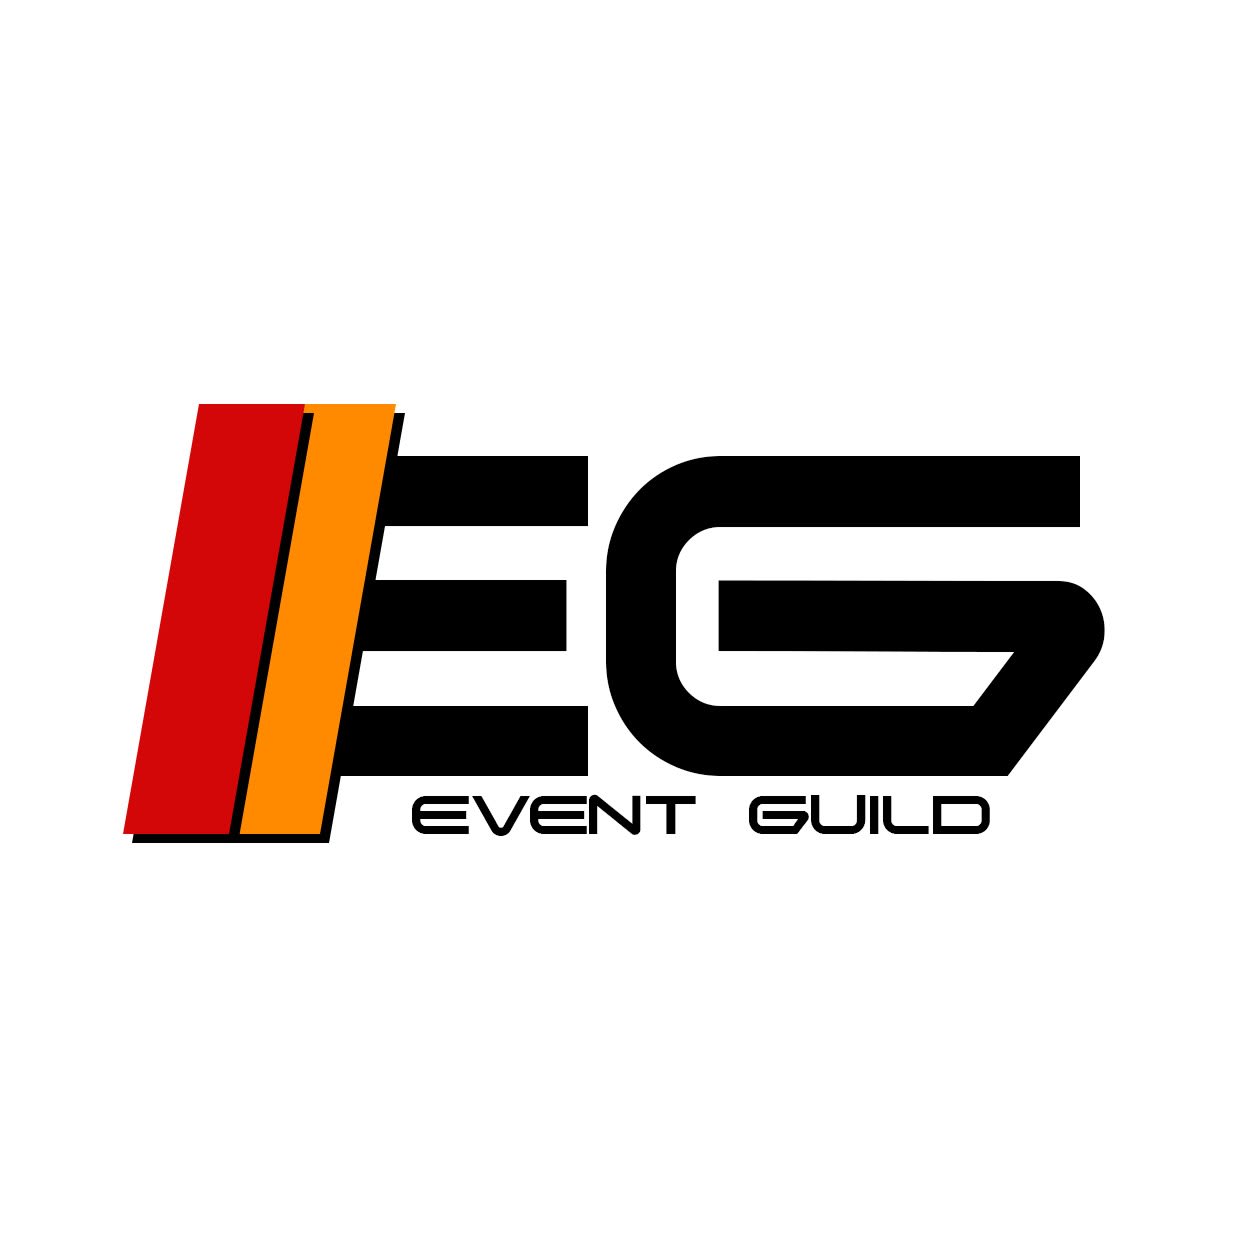 Event Guild